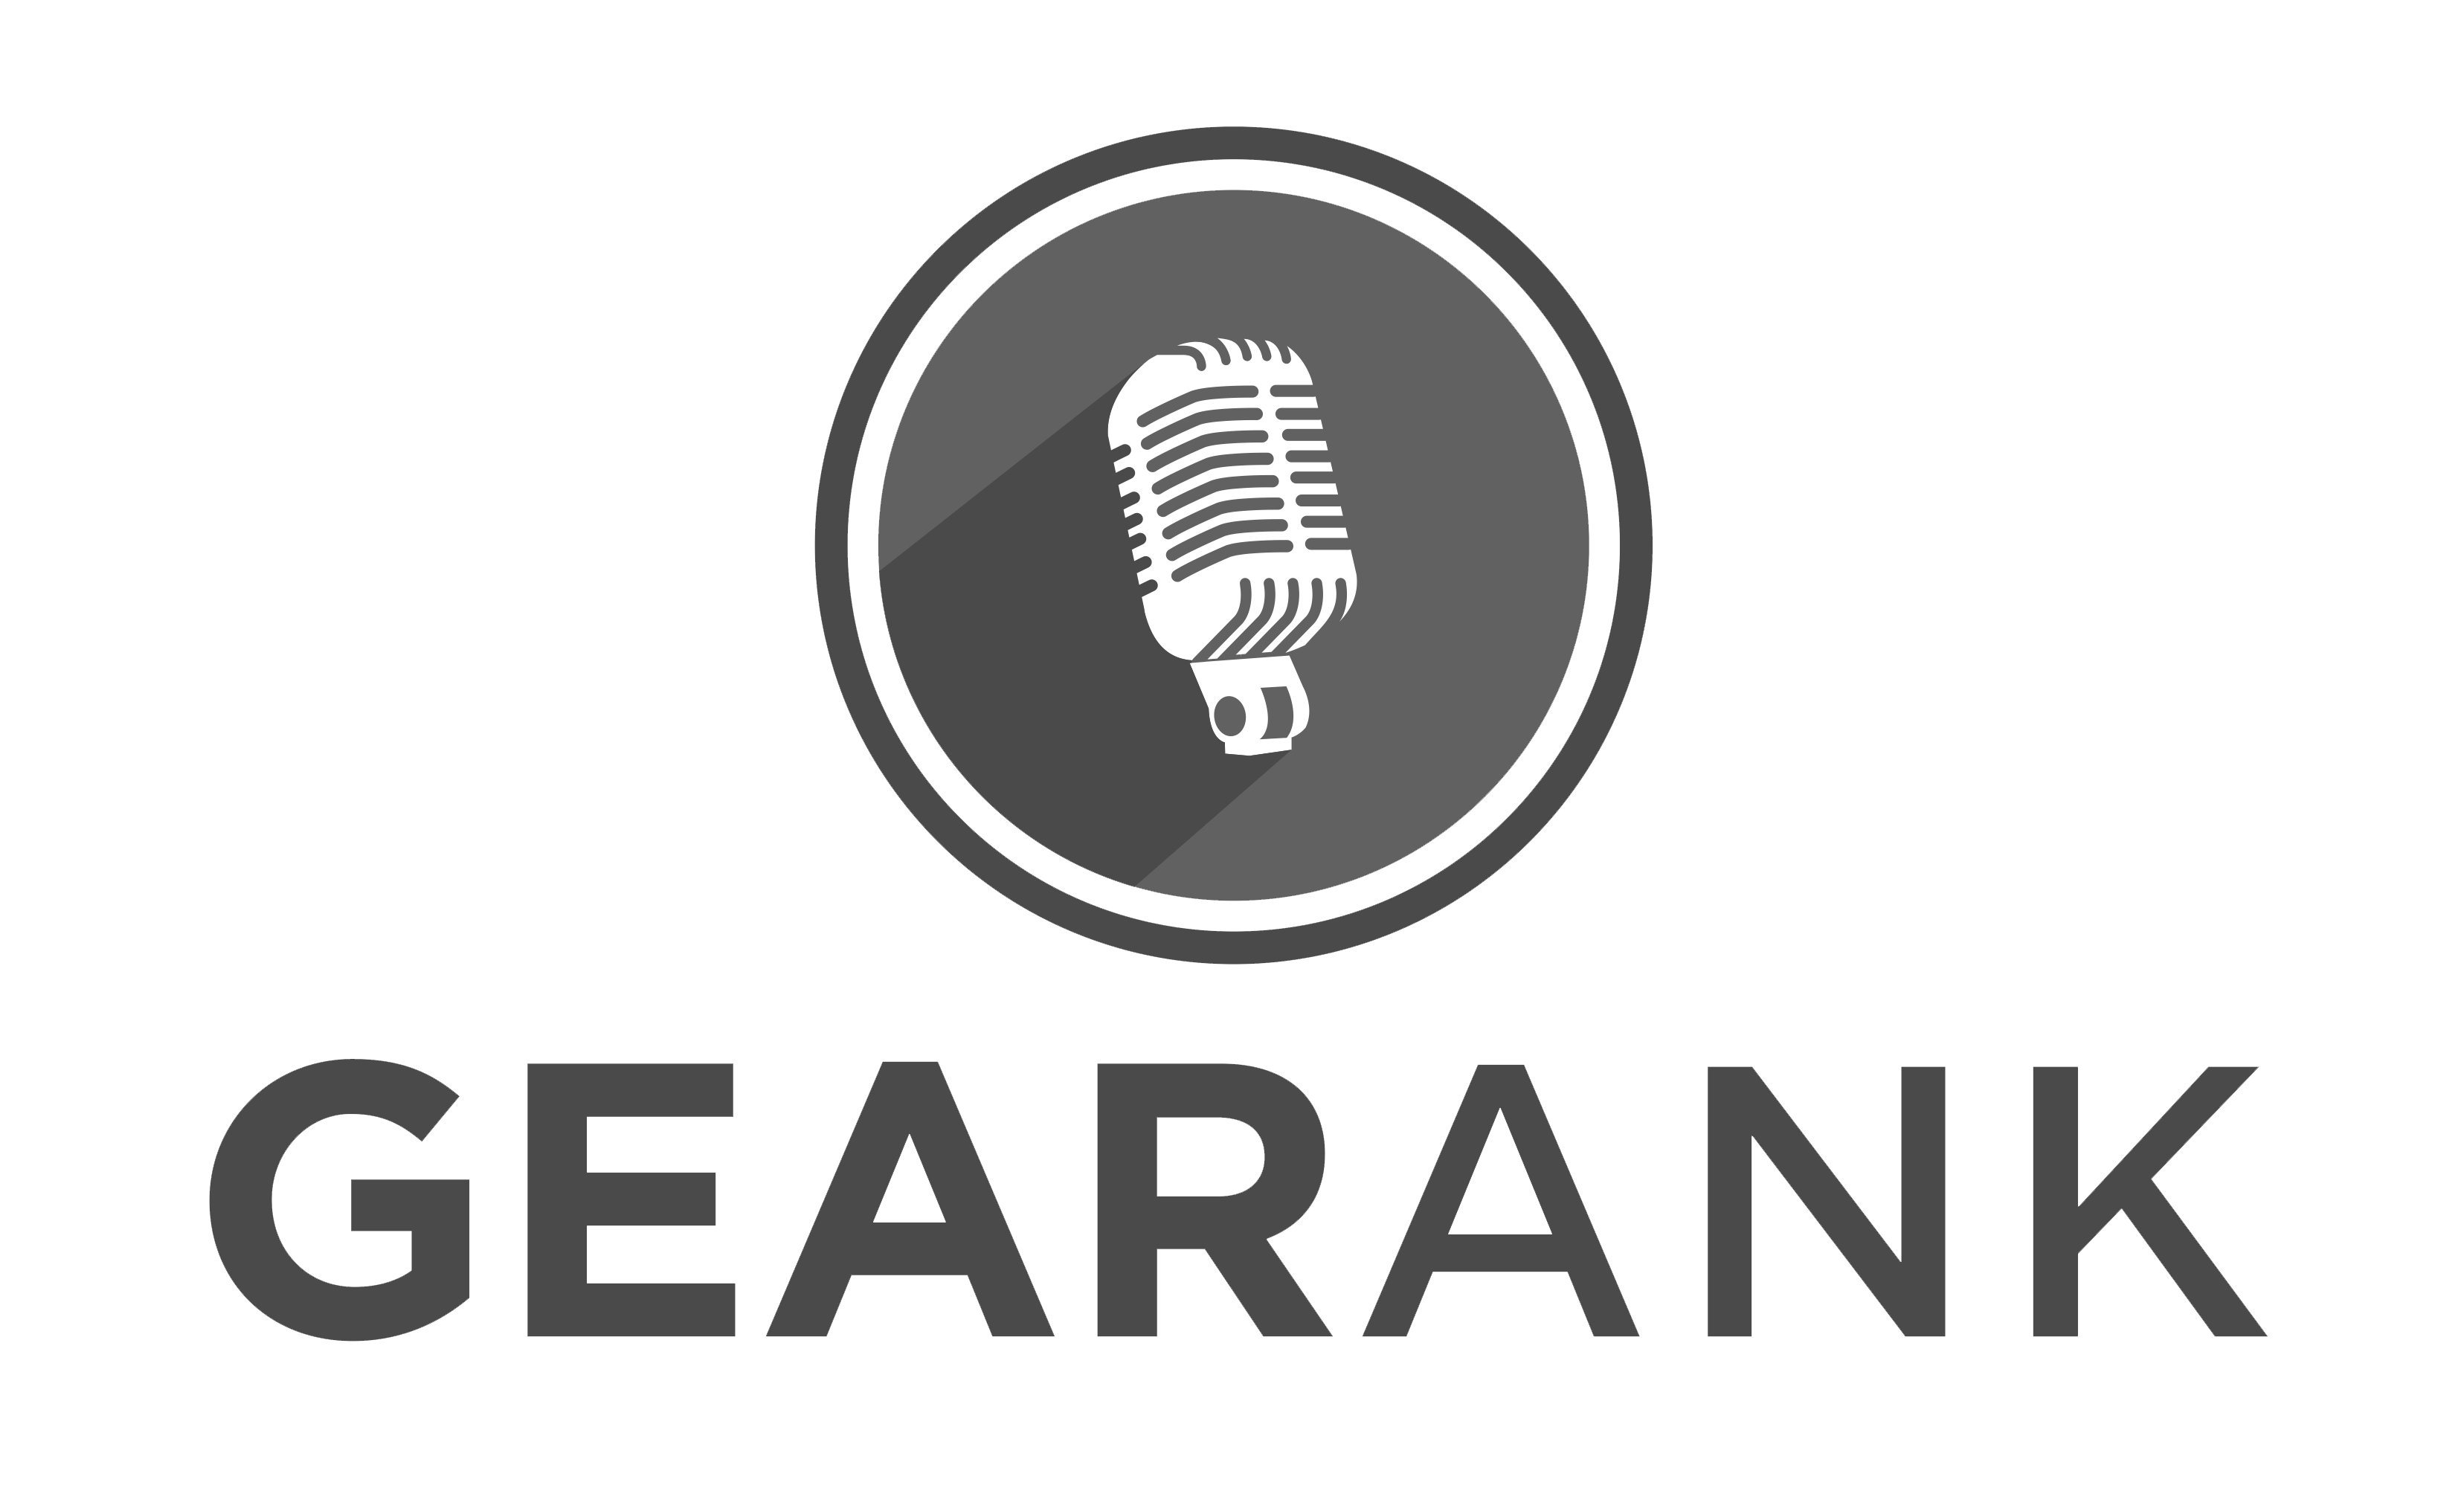 Gearank Logo Gearank Music Gear Information for Live Performance or Studio